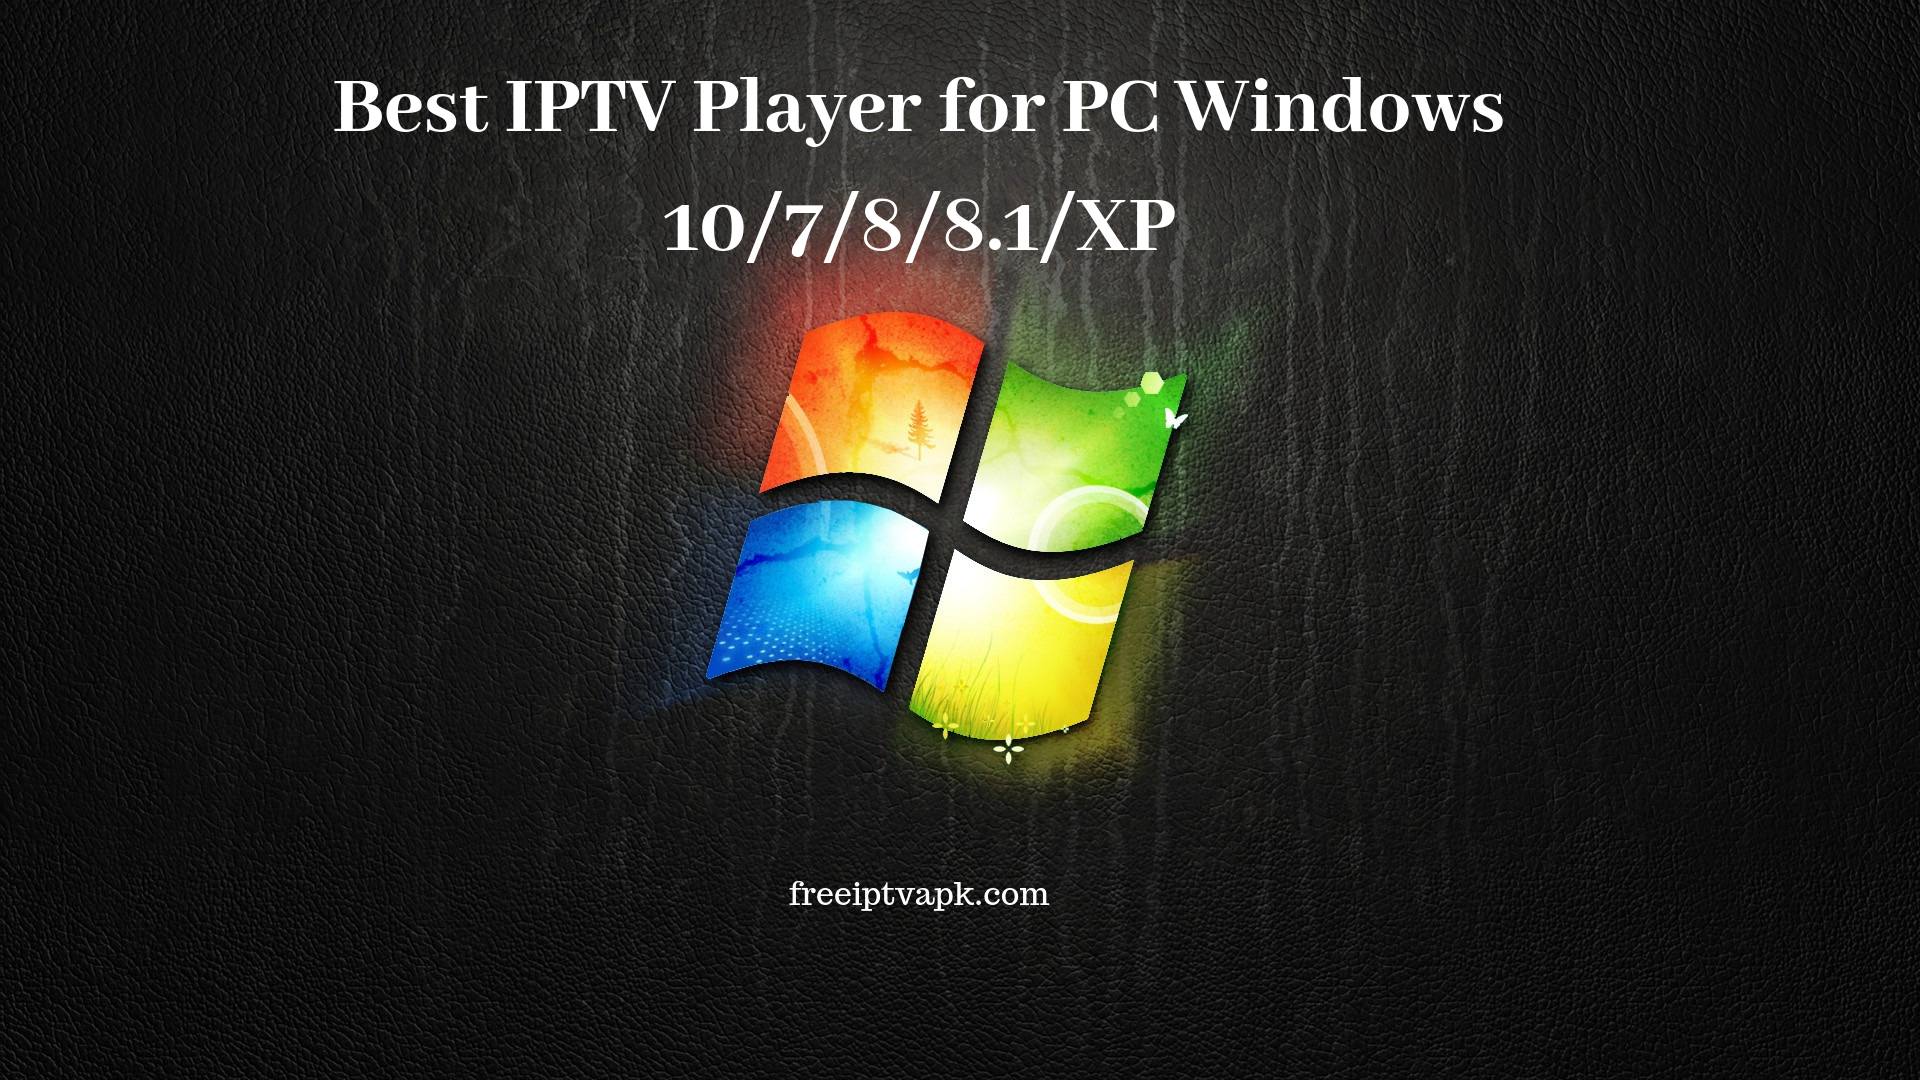 best iptv player for windows